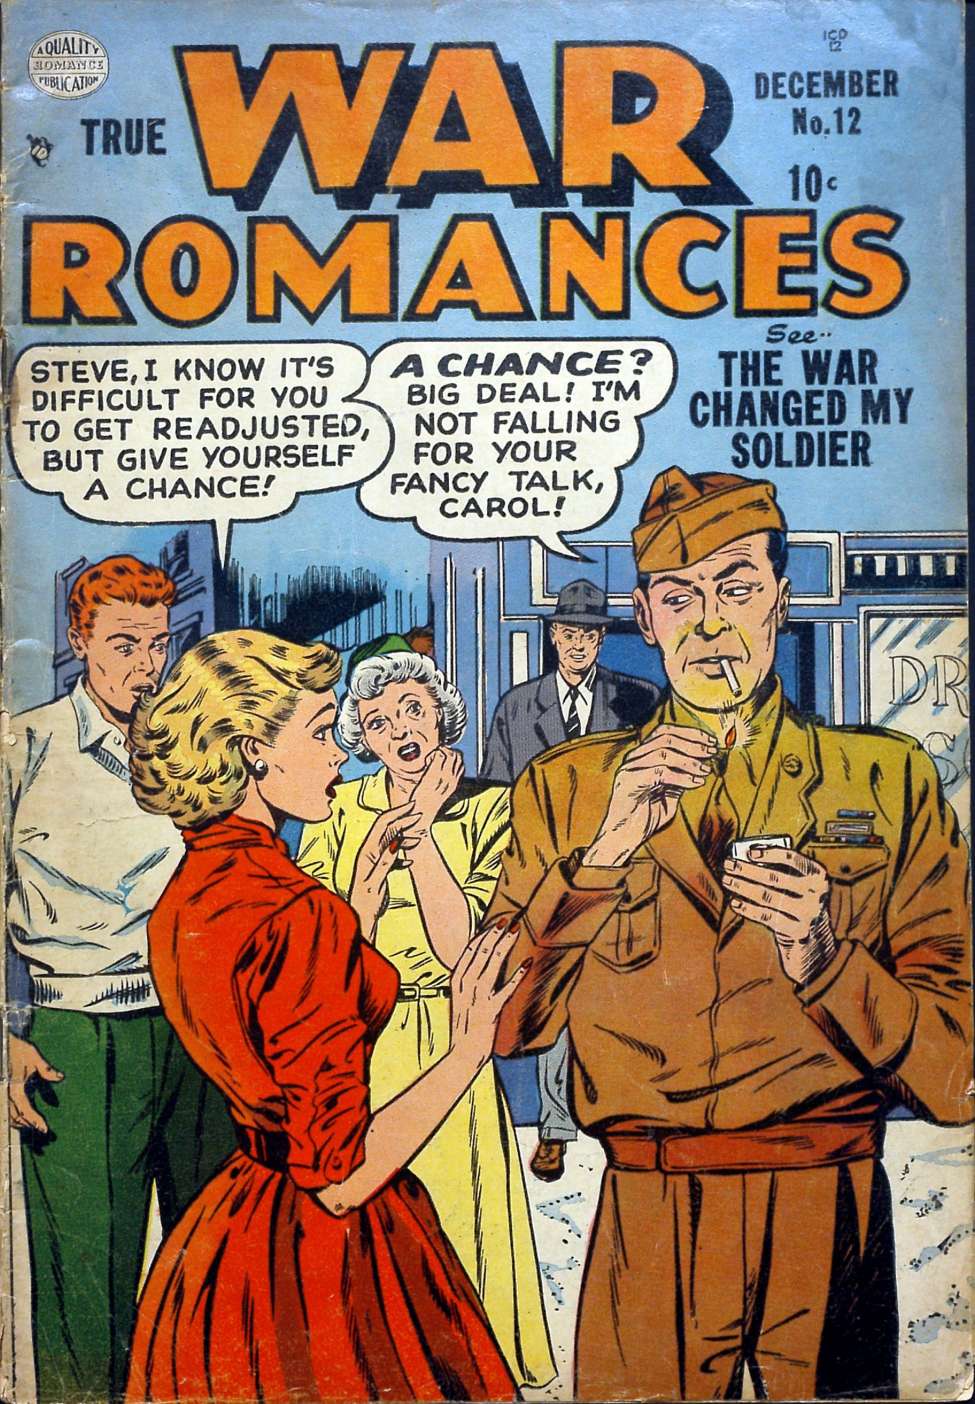 True War Romances #12, Quality Comics